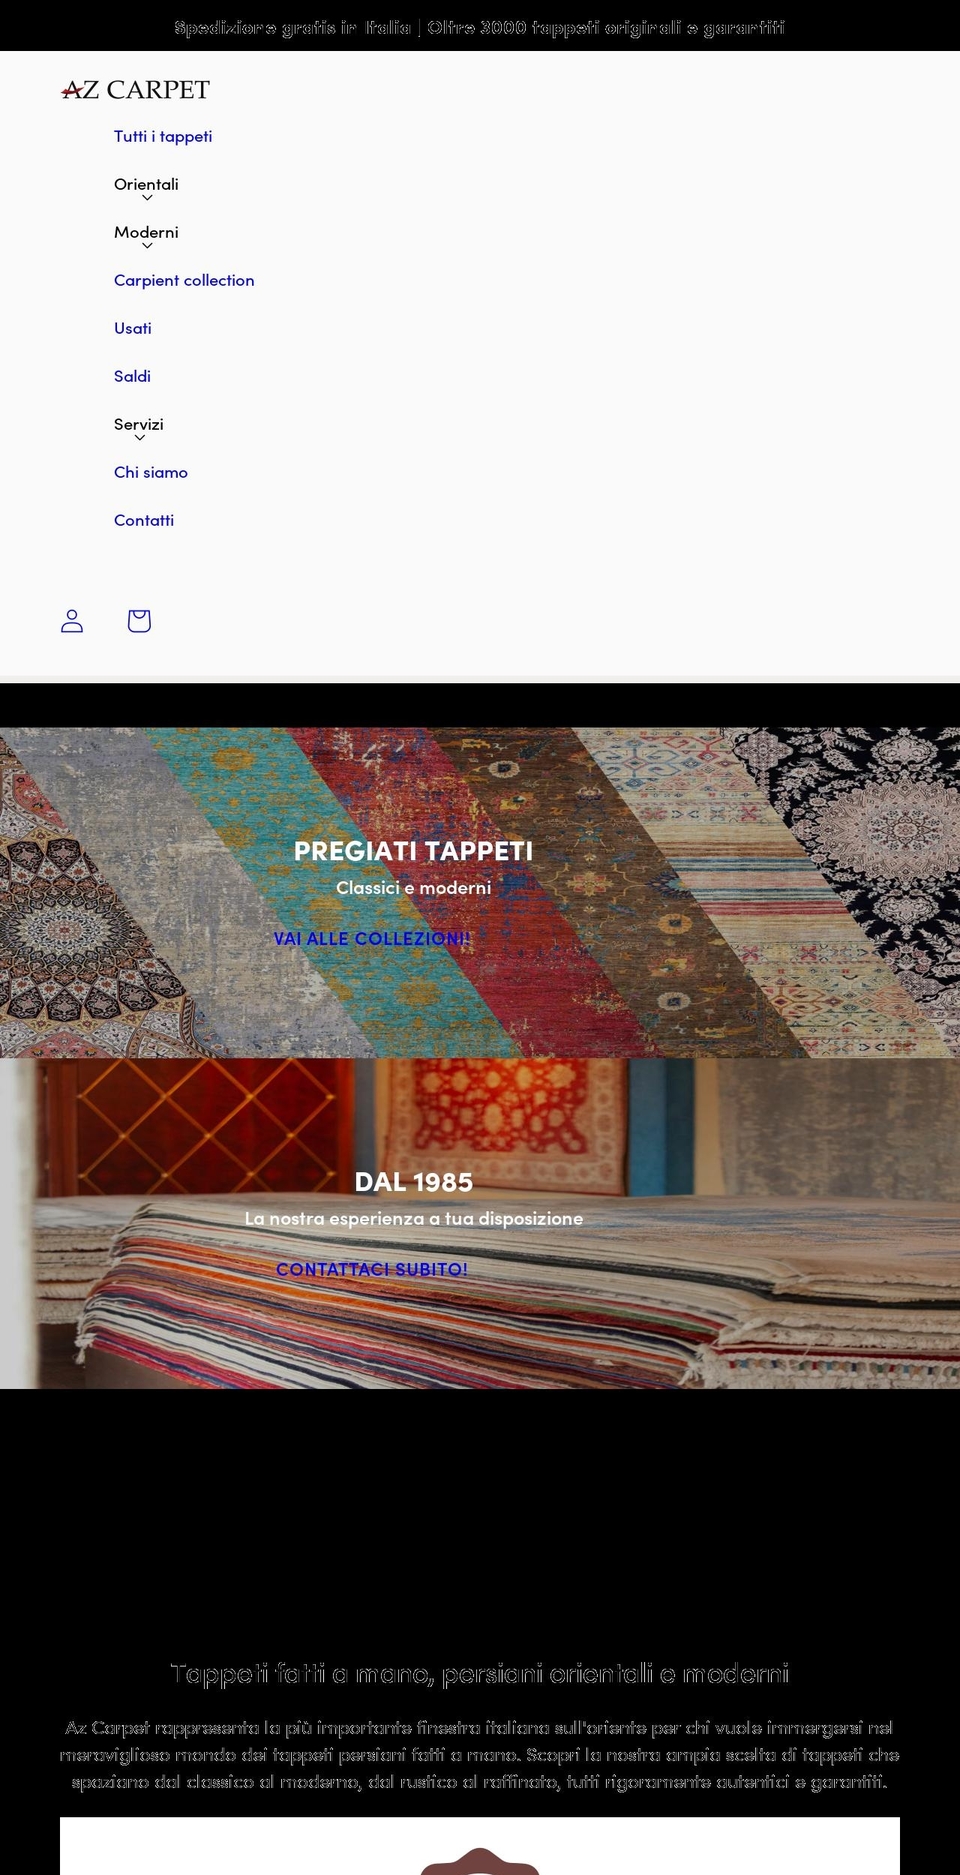 azcarpet.it shopify website screenshot